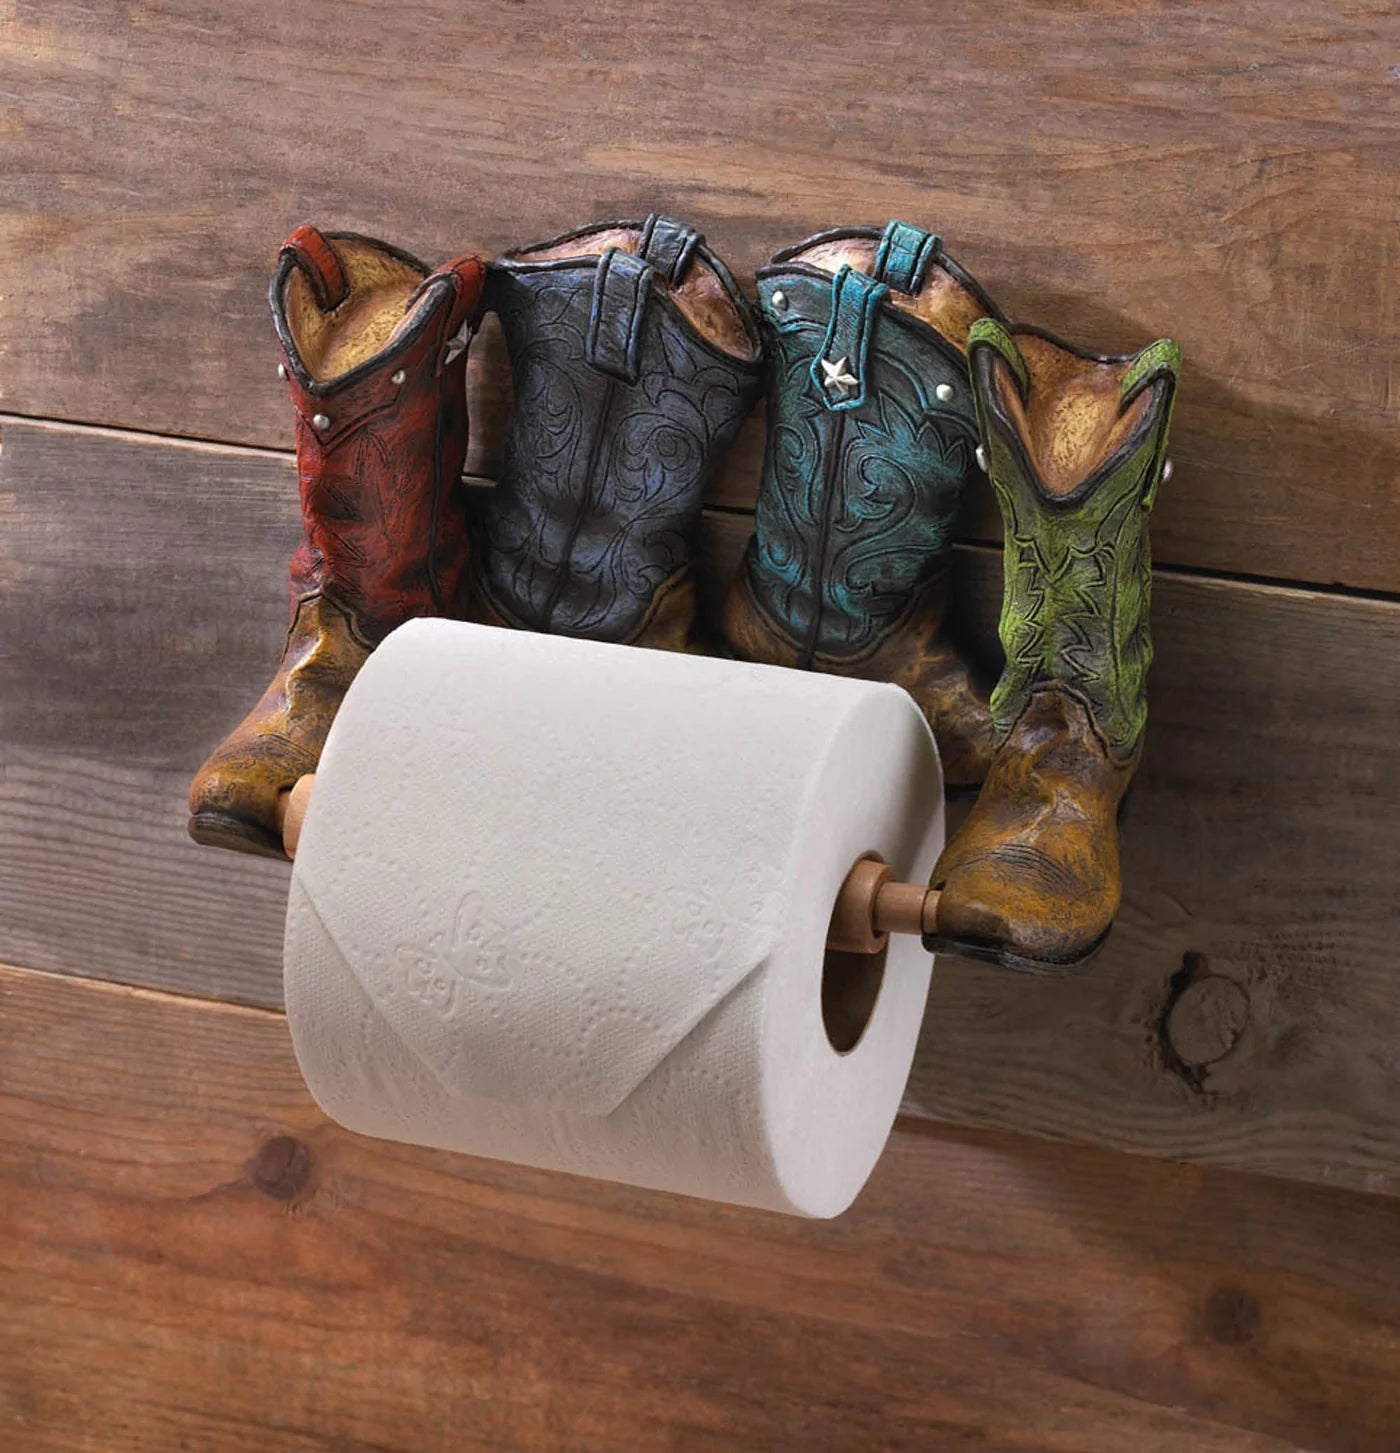 Cowboy Boots Toilet Paper Holder